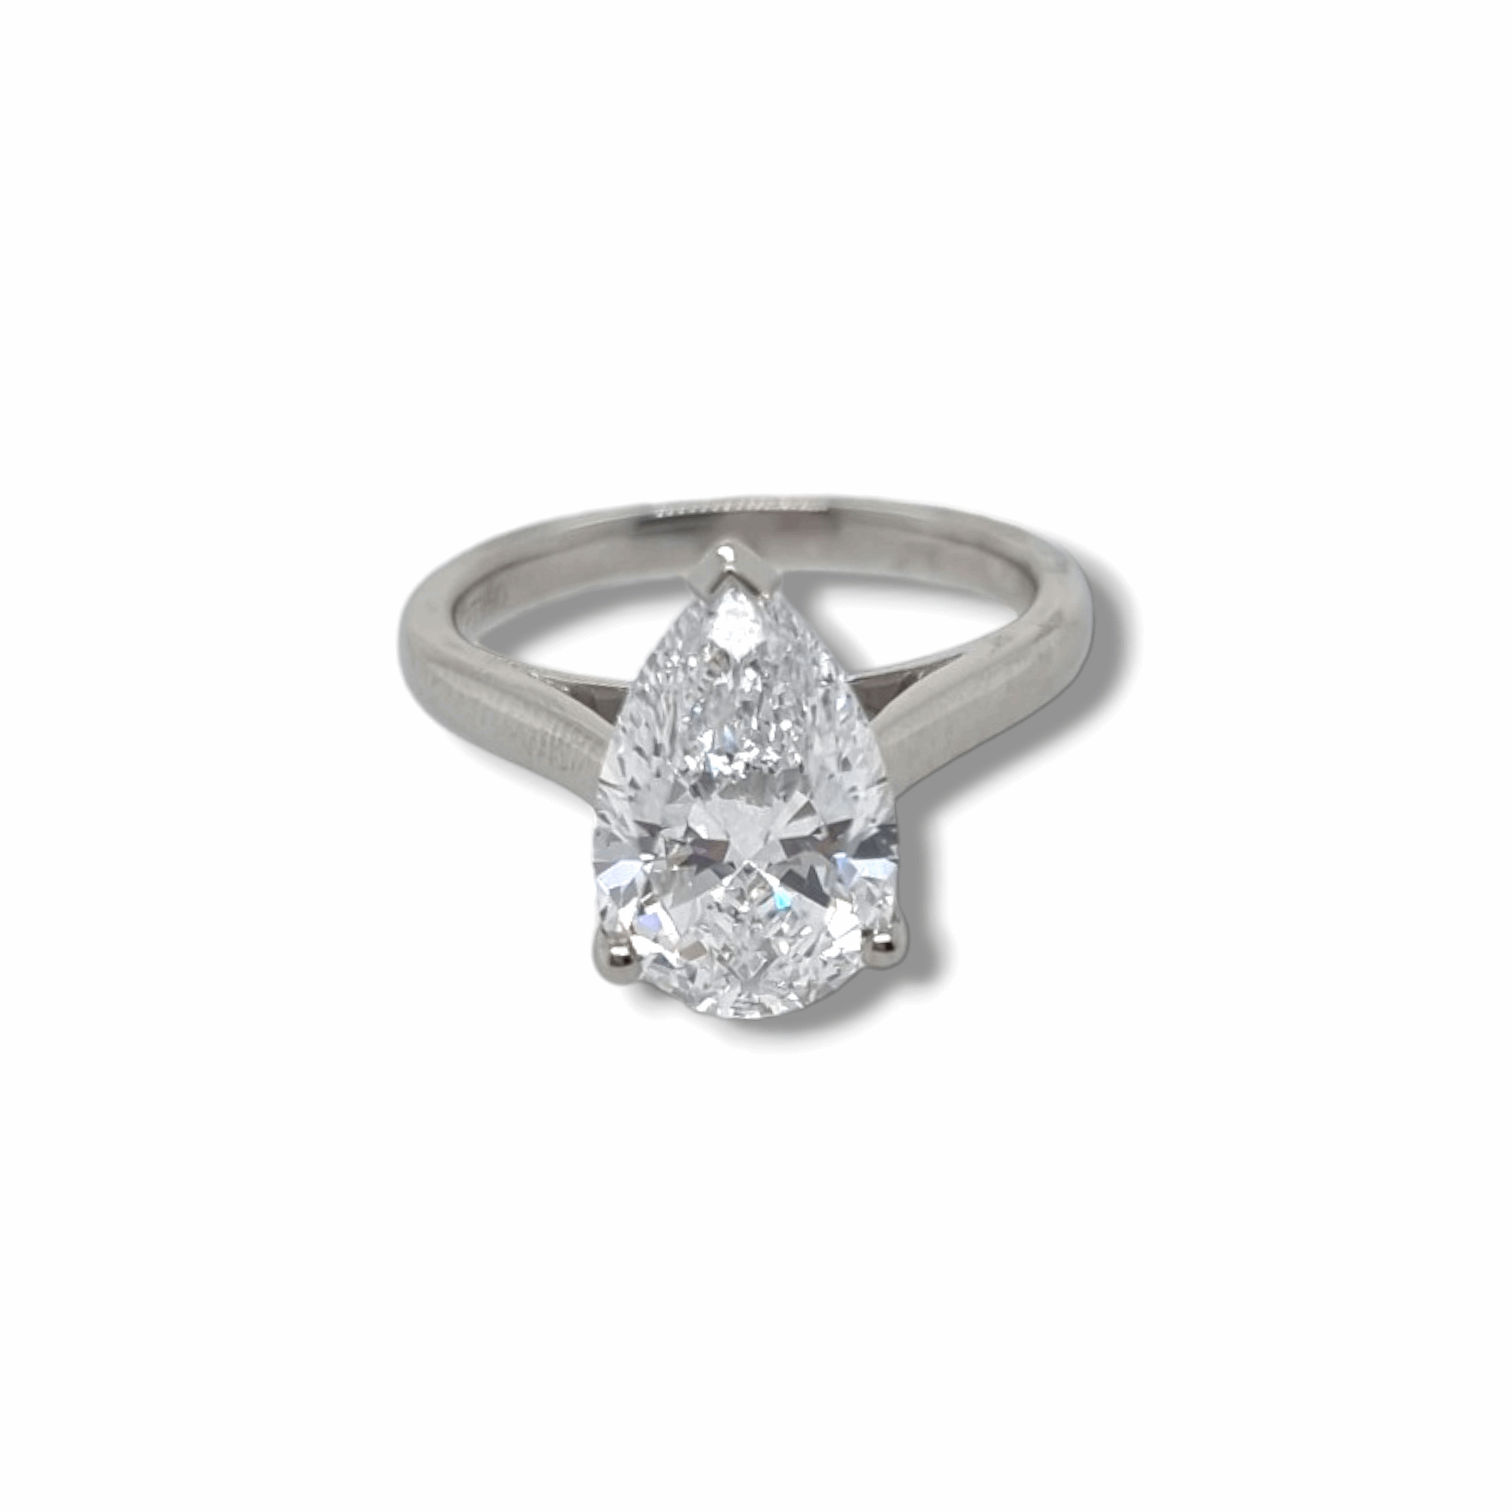 3.03ct Pear Cut Diamond Ring